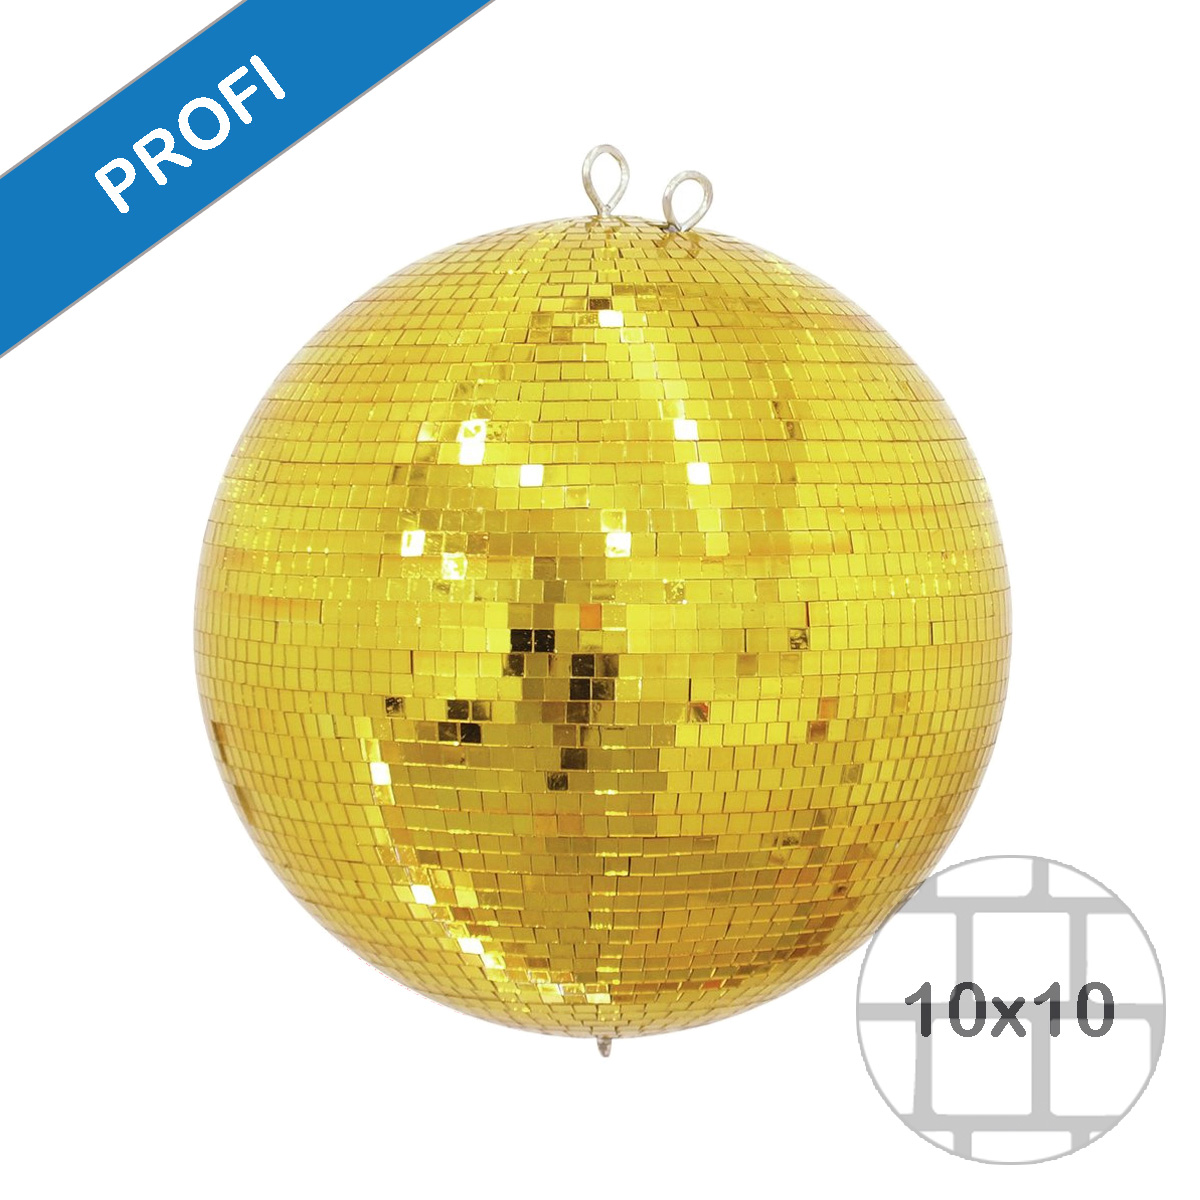 Spiegelkugel 30cm farbig gold- Diskokugel (Discokugel) Party Lichteffekt - Echtglas - mirrorball gold color